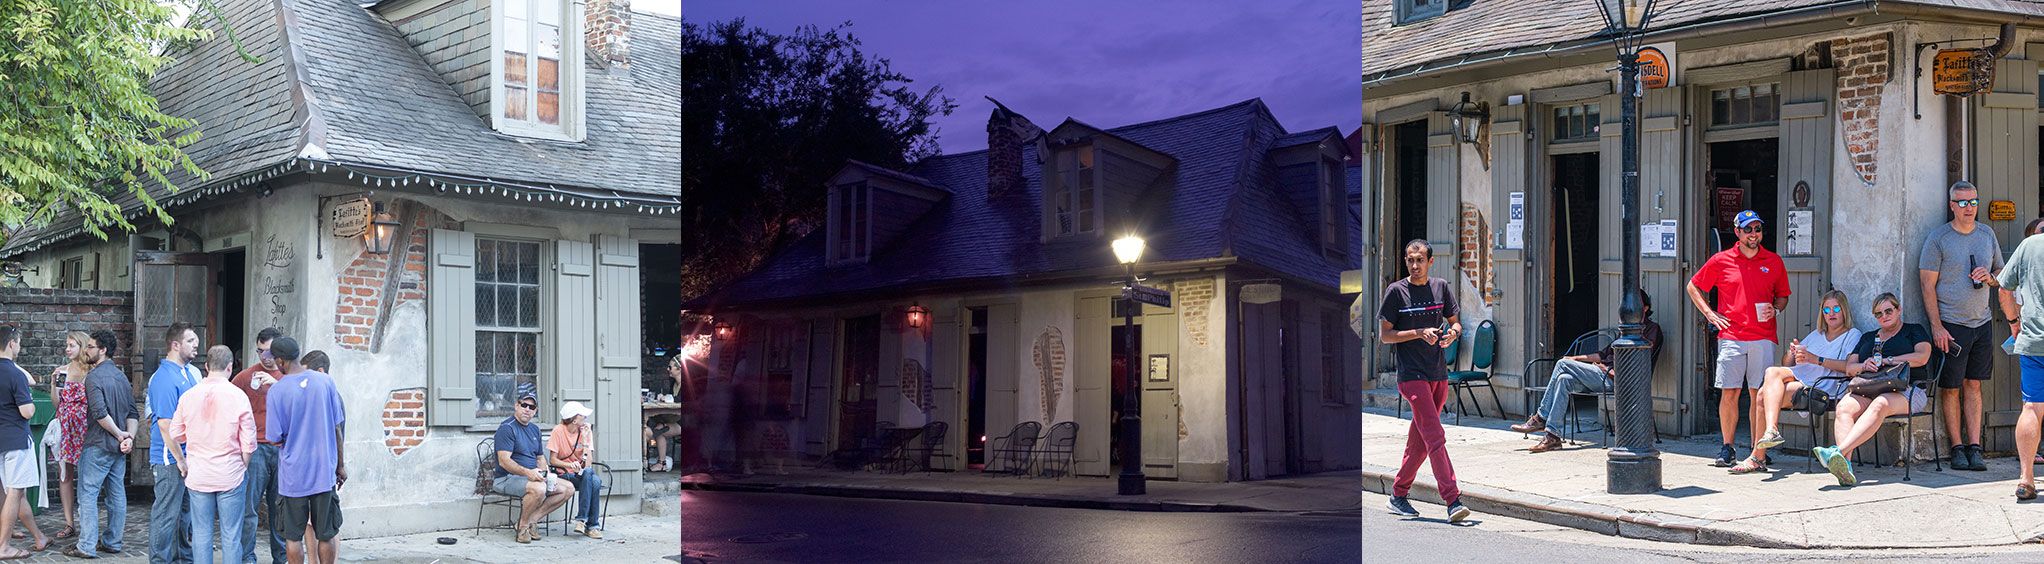 Lafitte's Blacksmith Shop Bar in New Orleans, LA